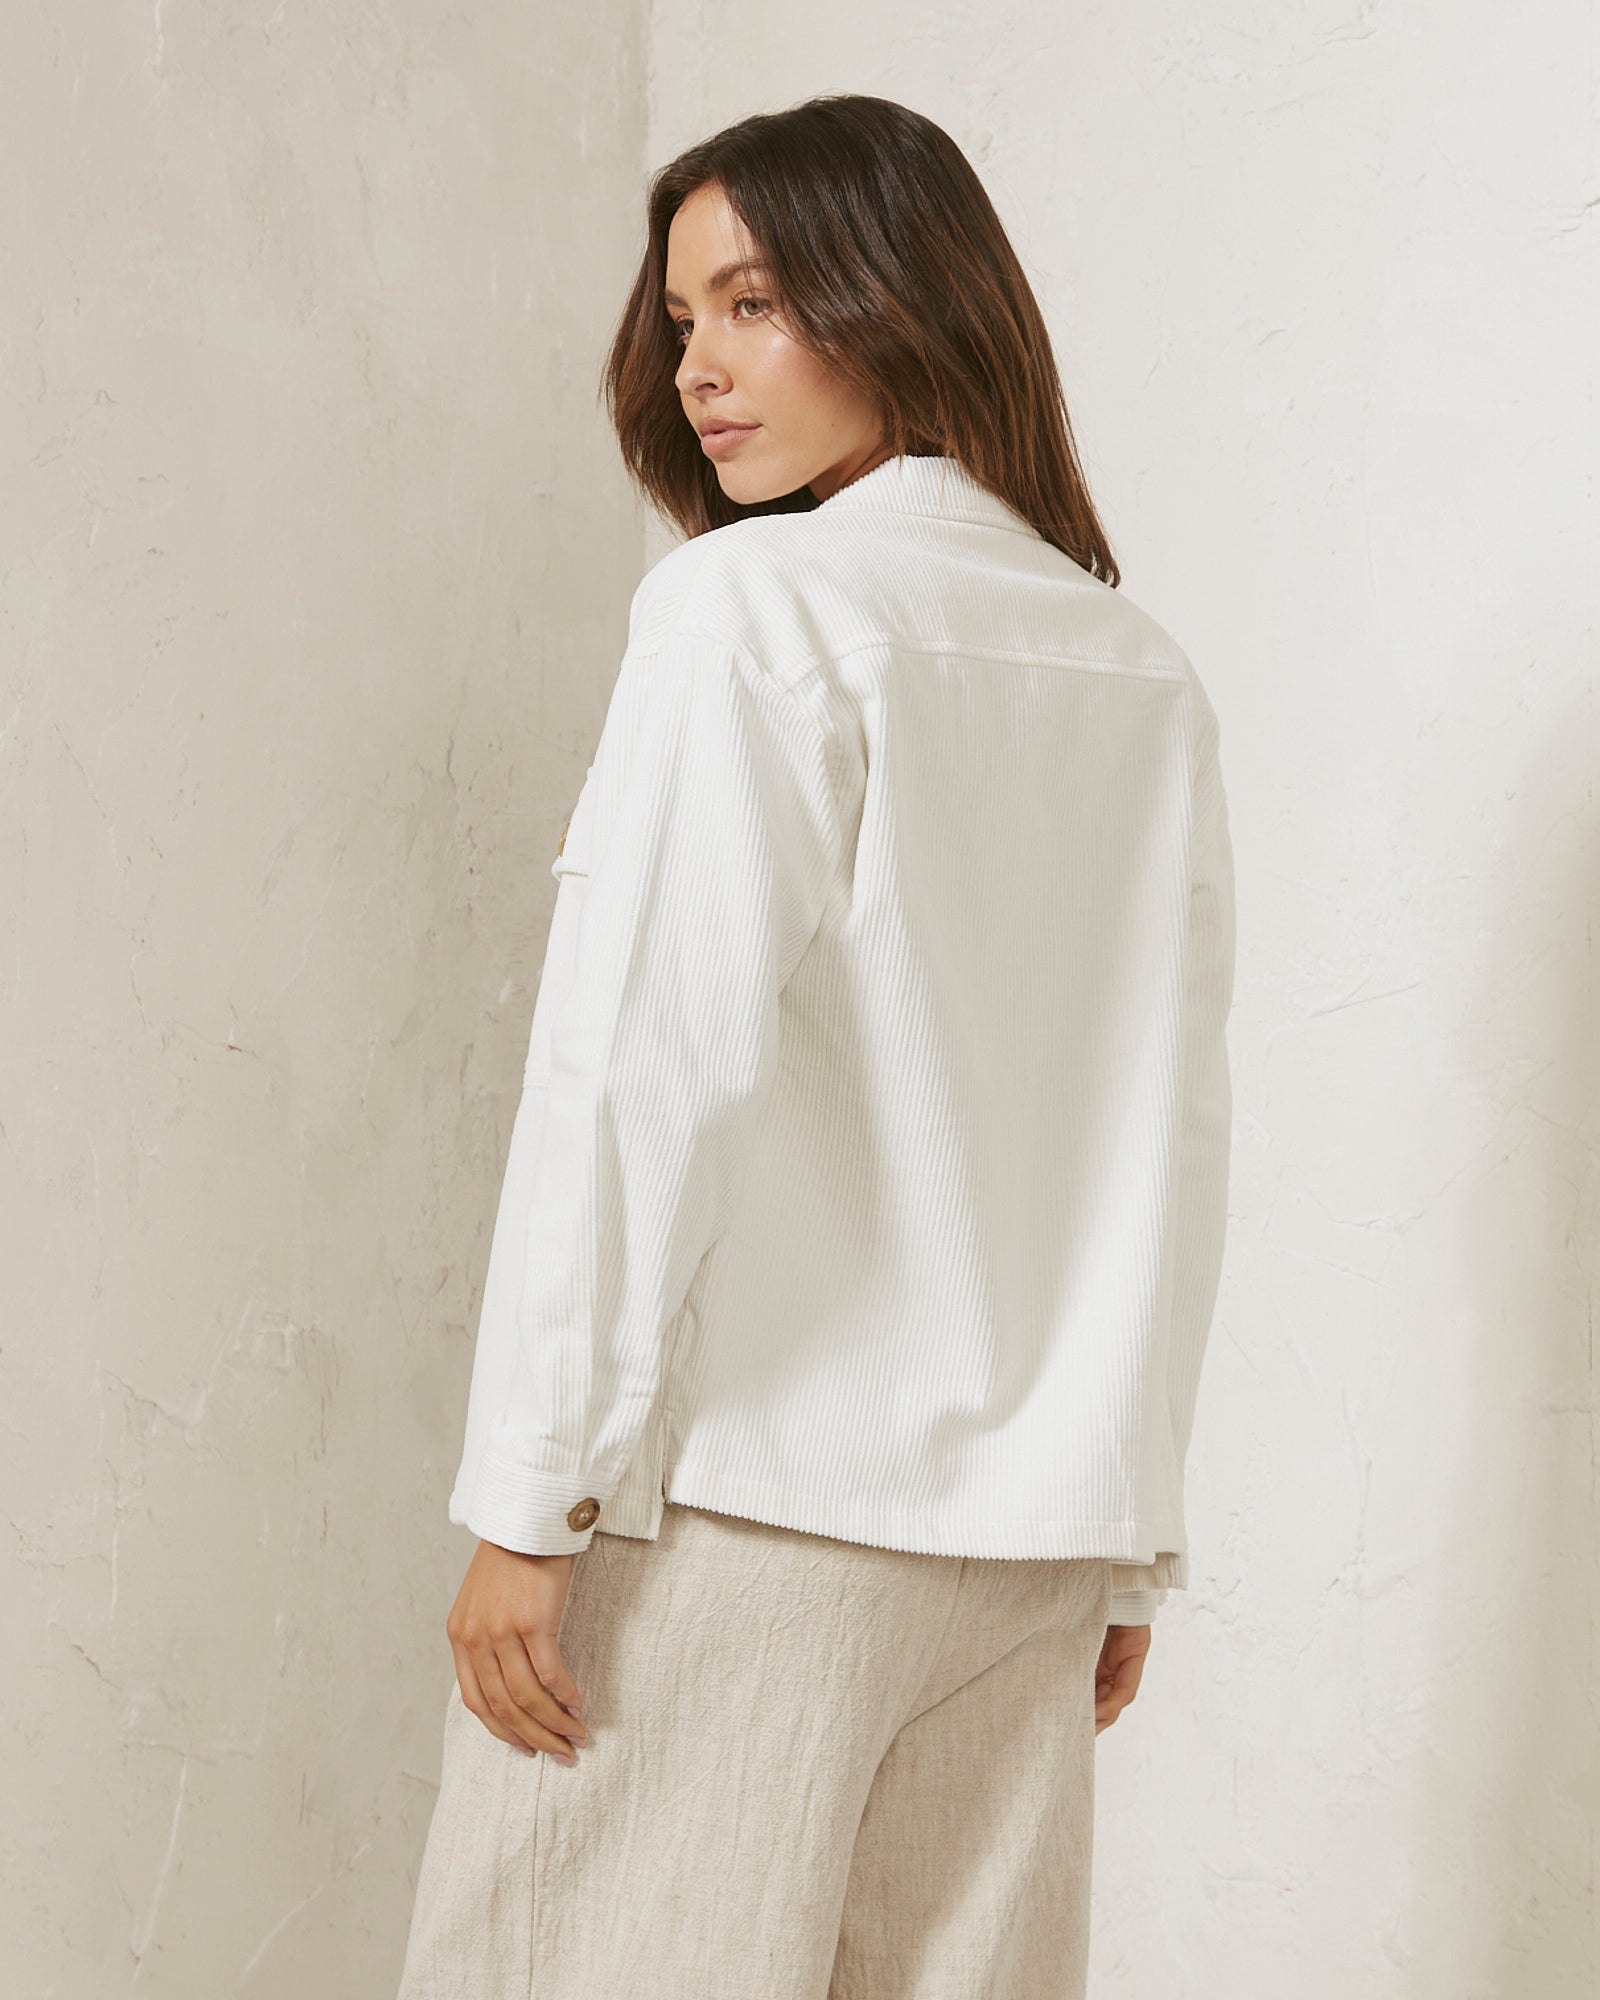 Fayth White Cord Jacket